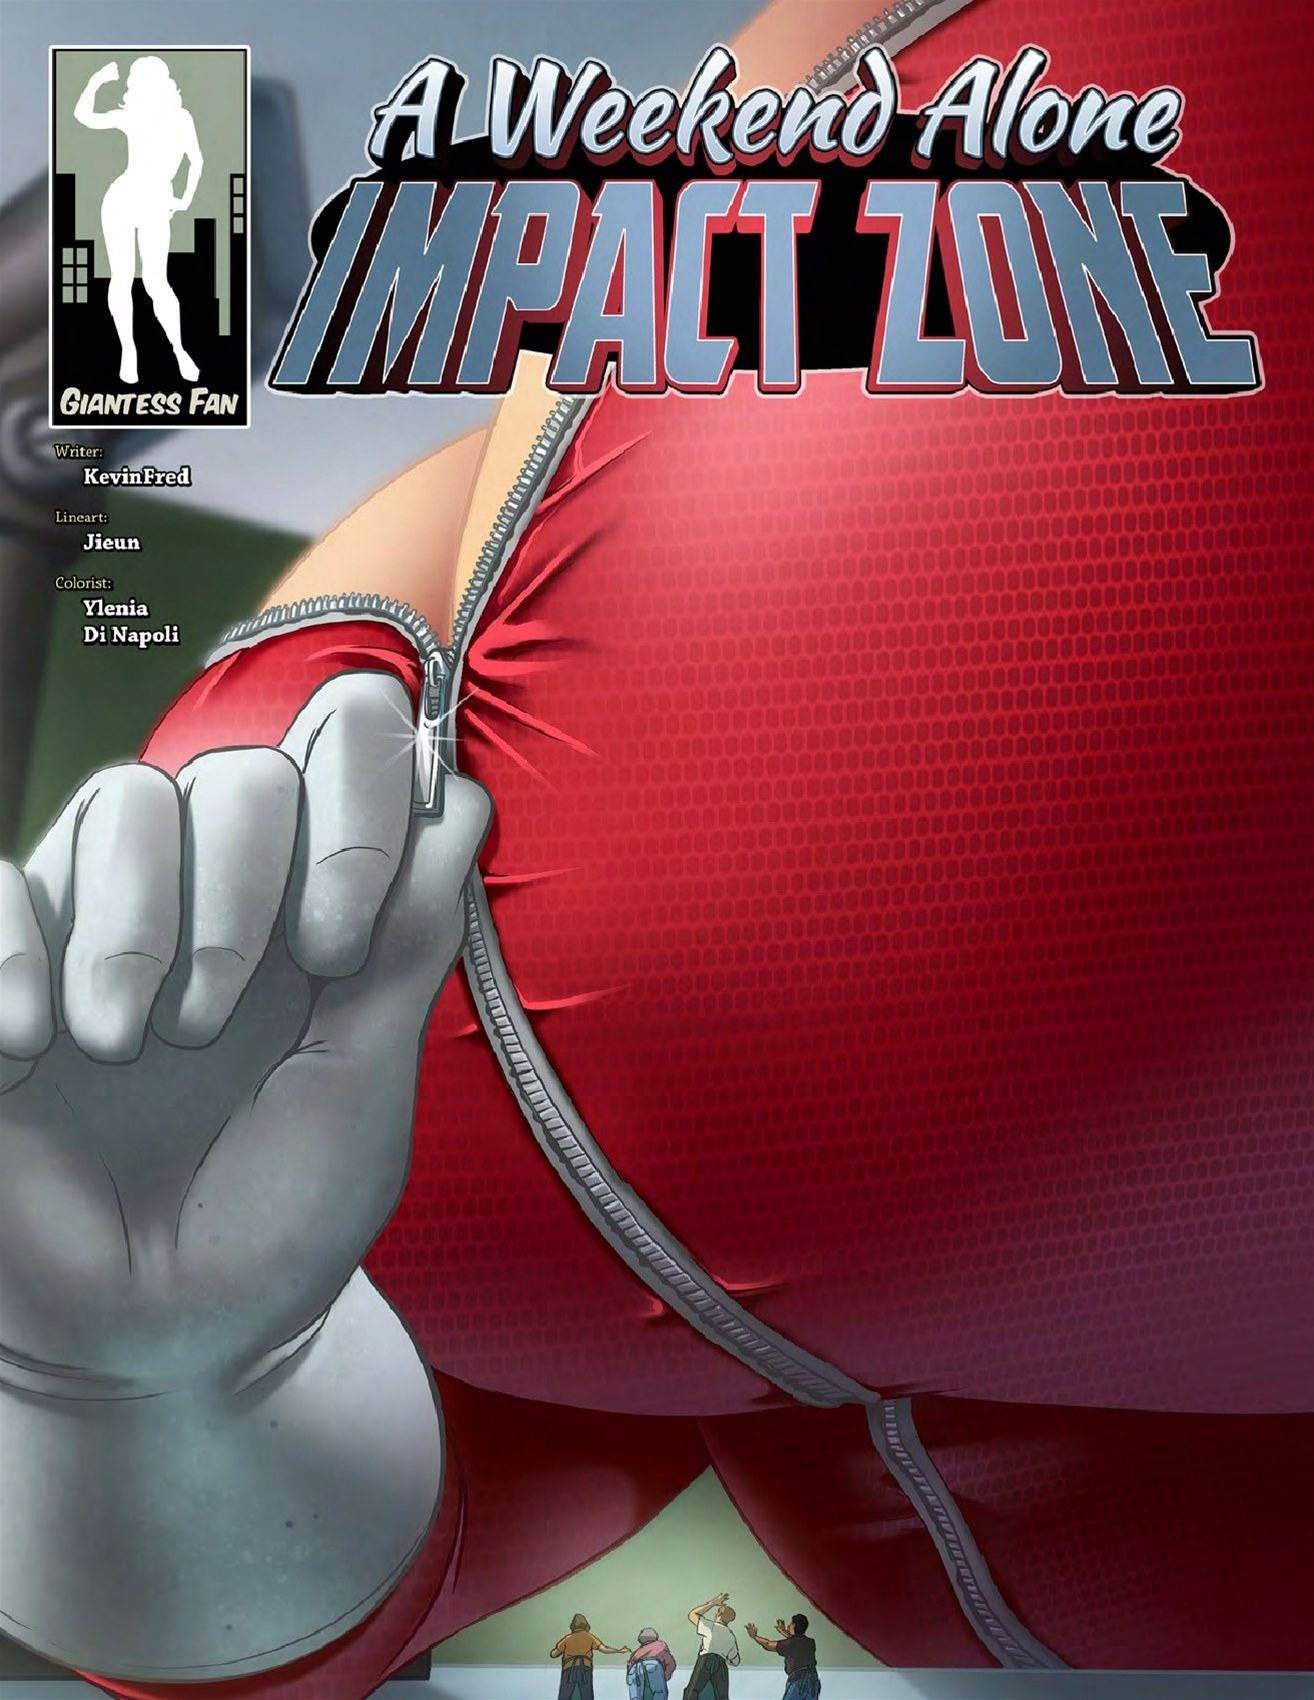 A Weekend Alone - Impact Zone - Giantess Fan, Latest chapters, Latest updat...